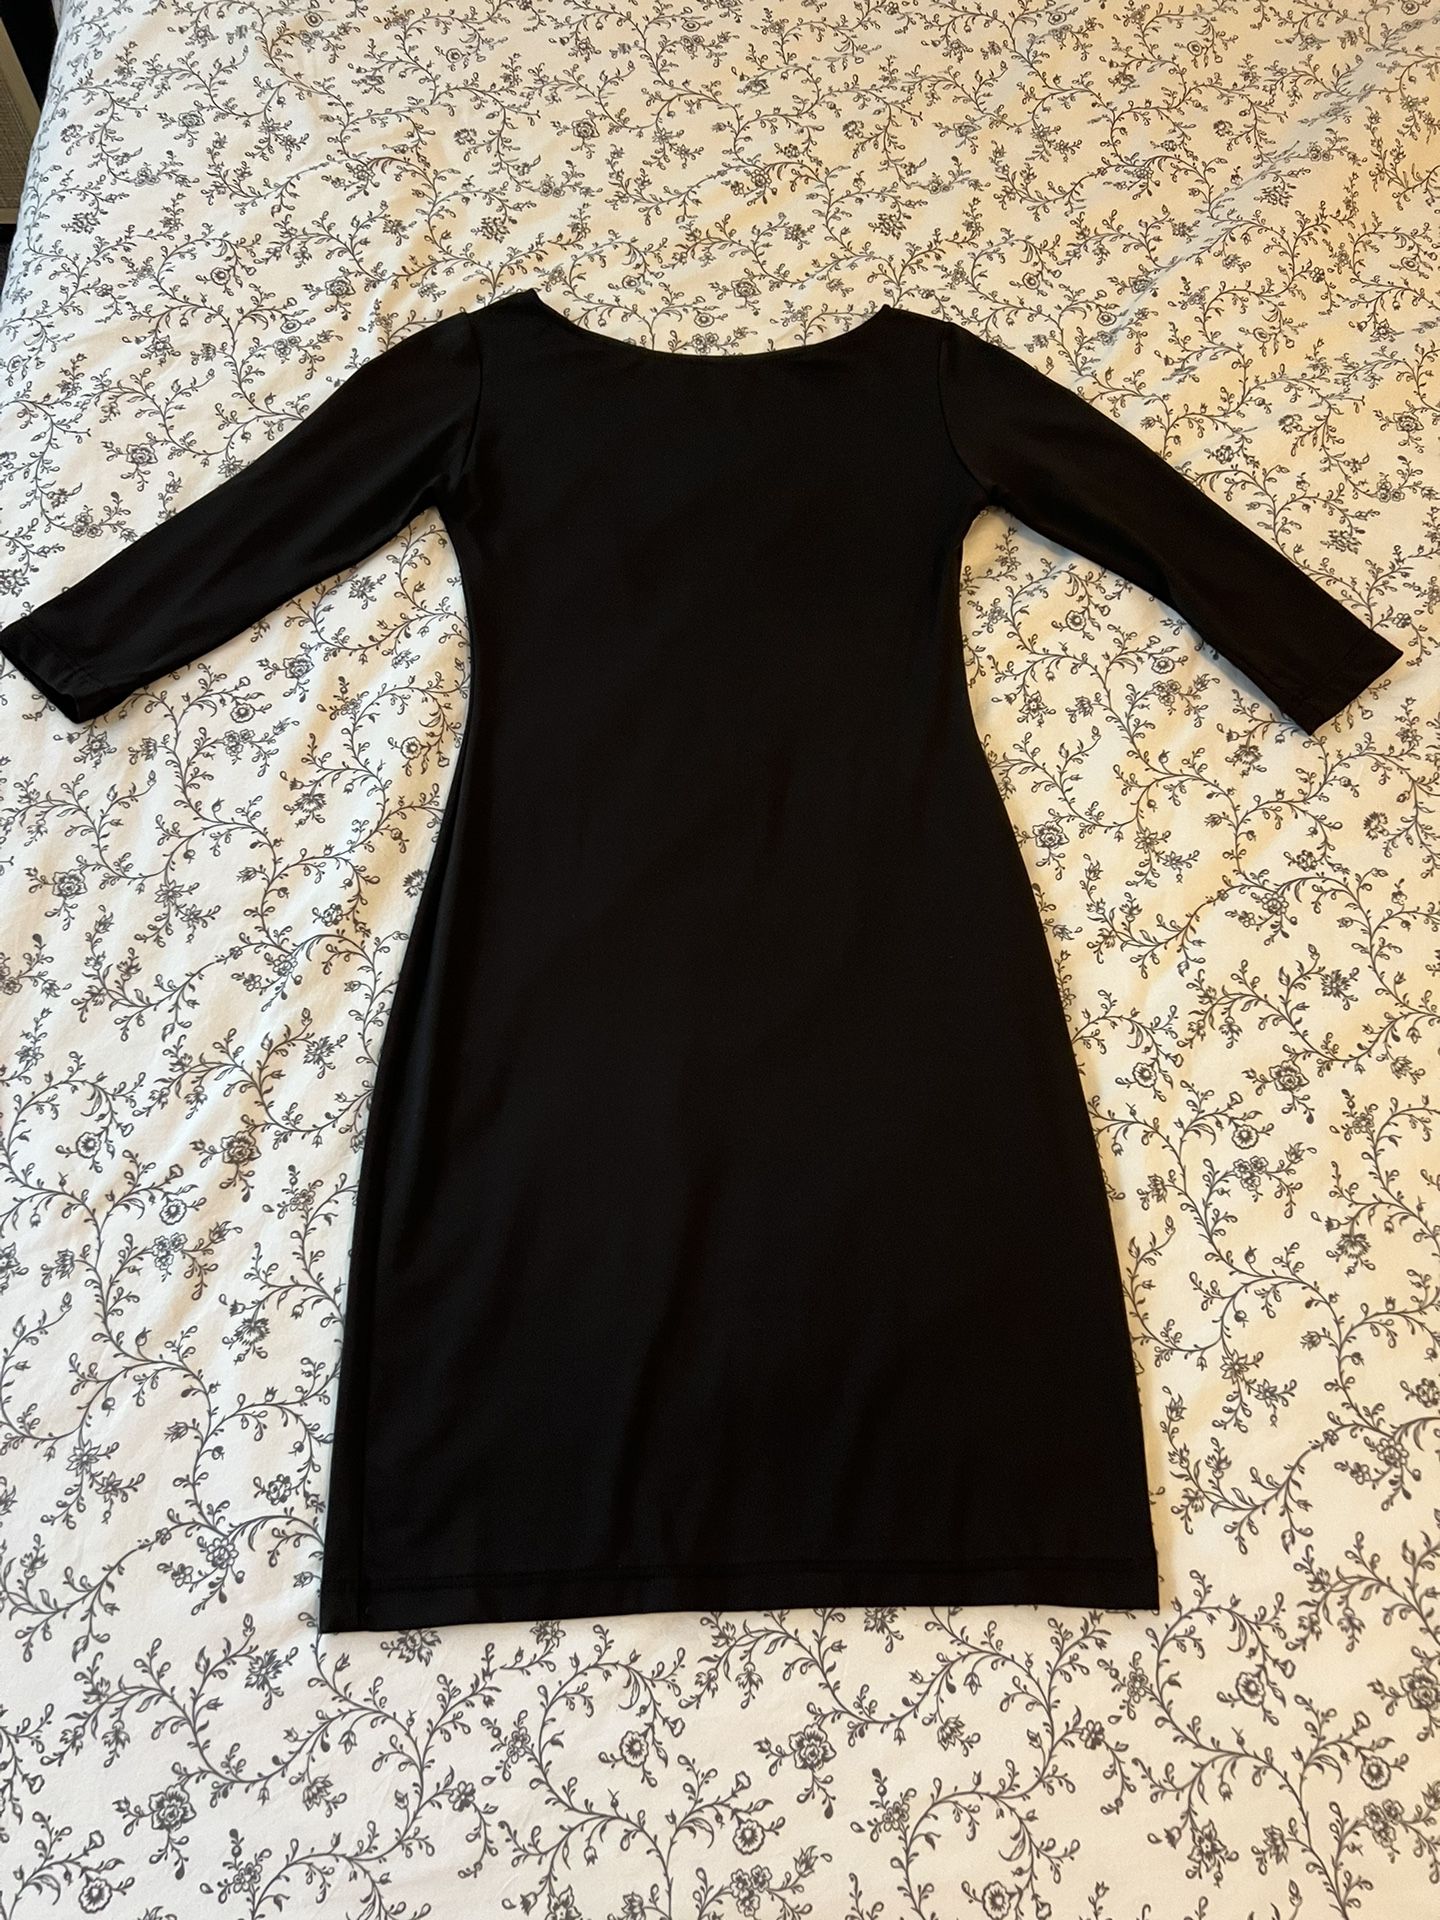 Black Dress Size s